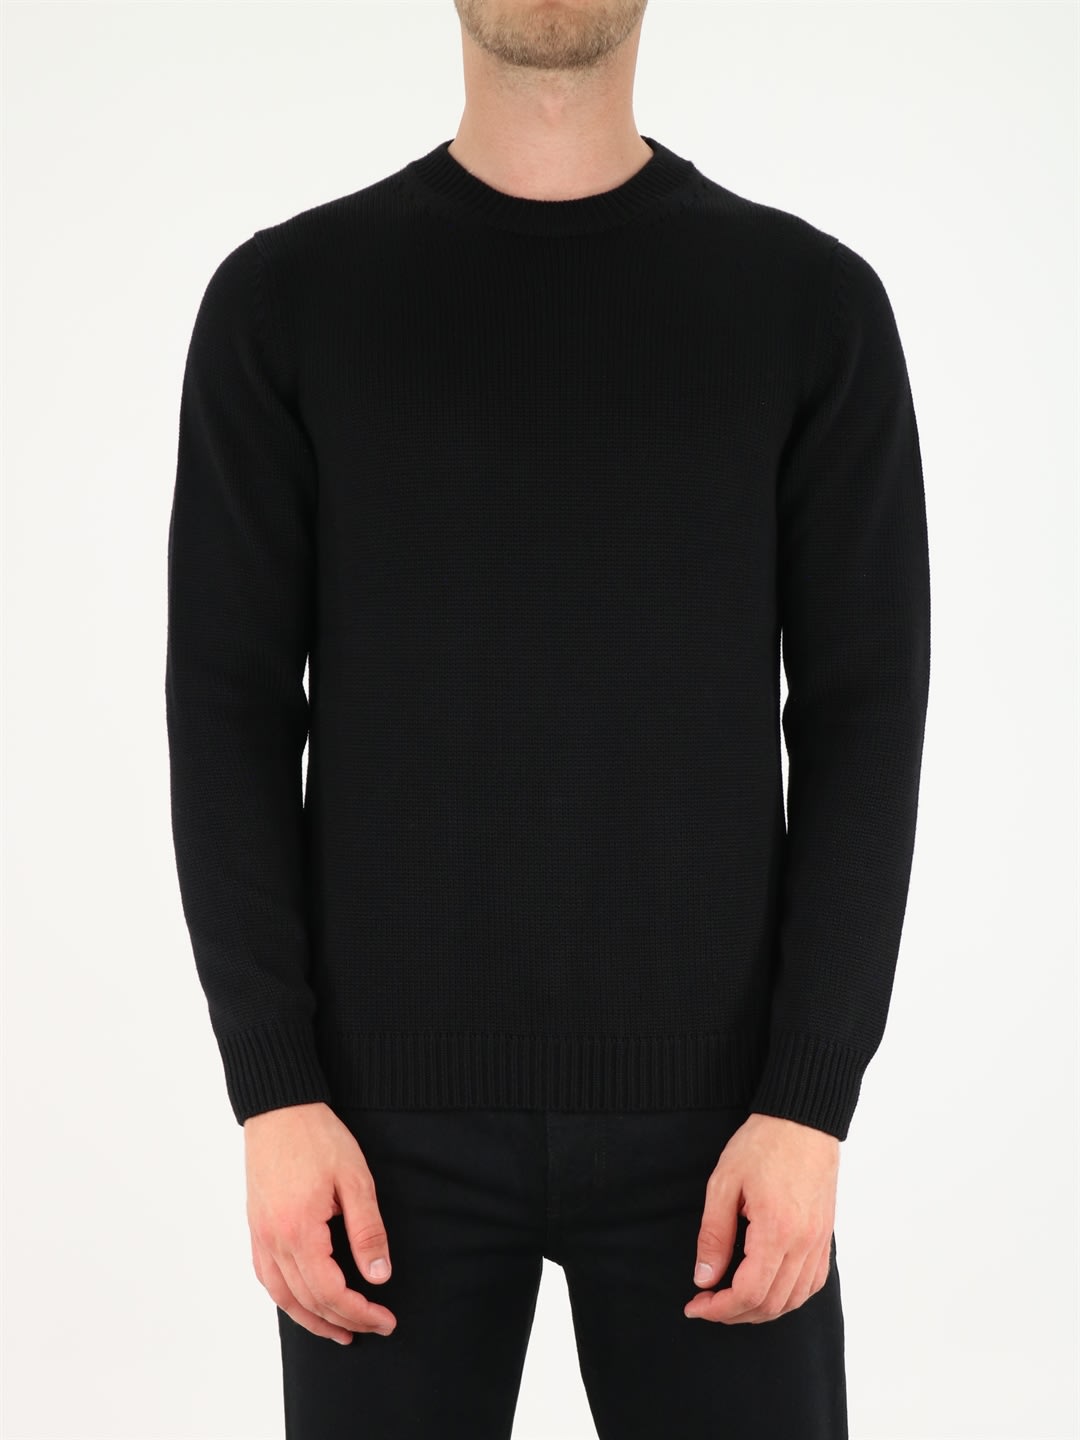 Roberto Collina Black Crewneck Sweater